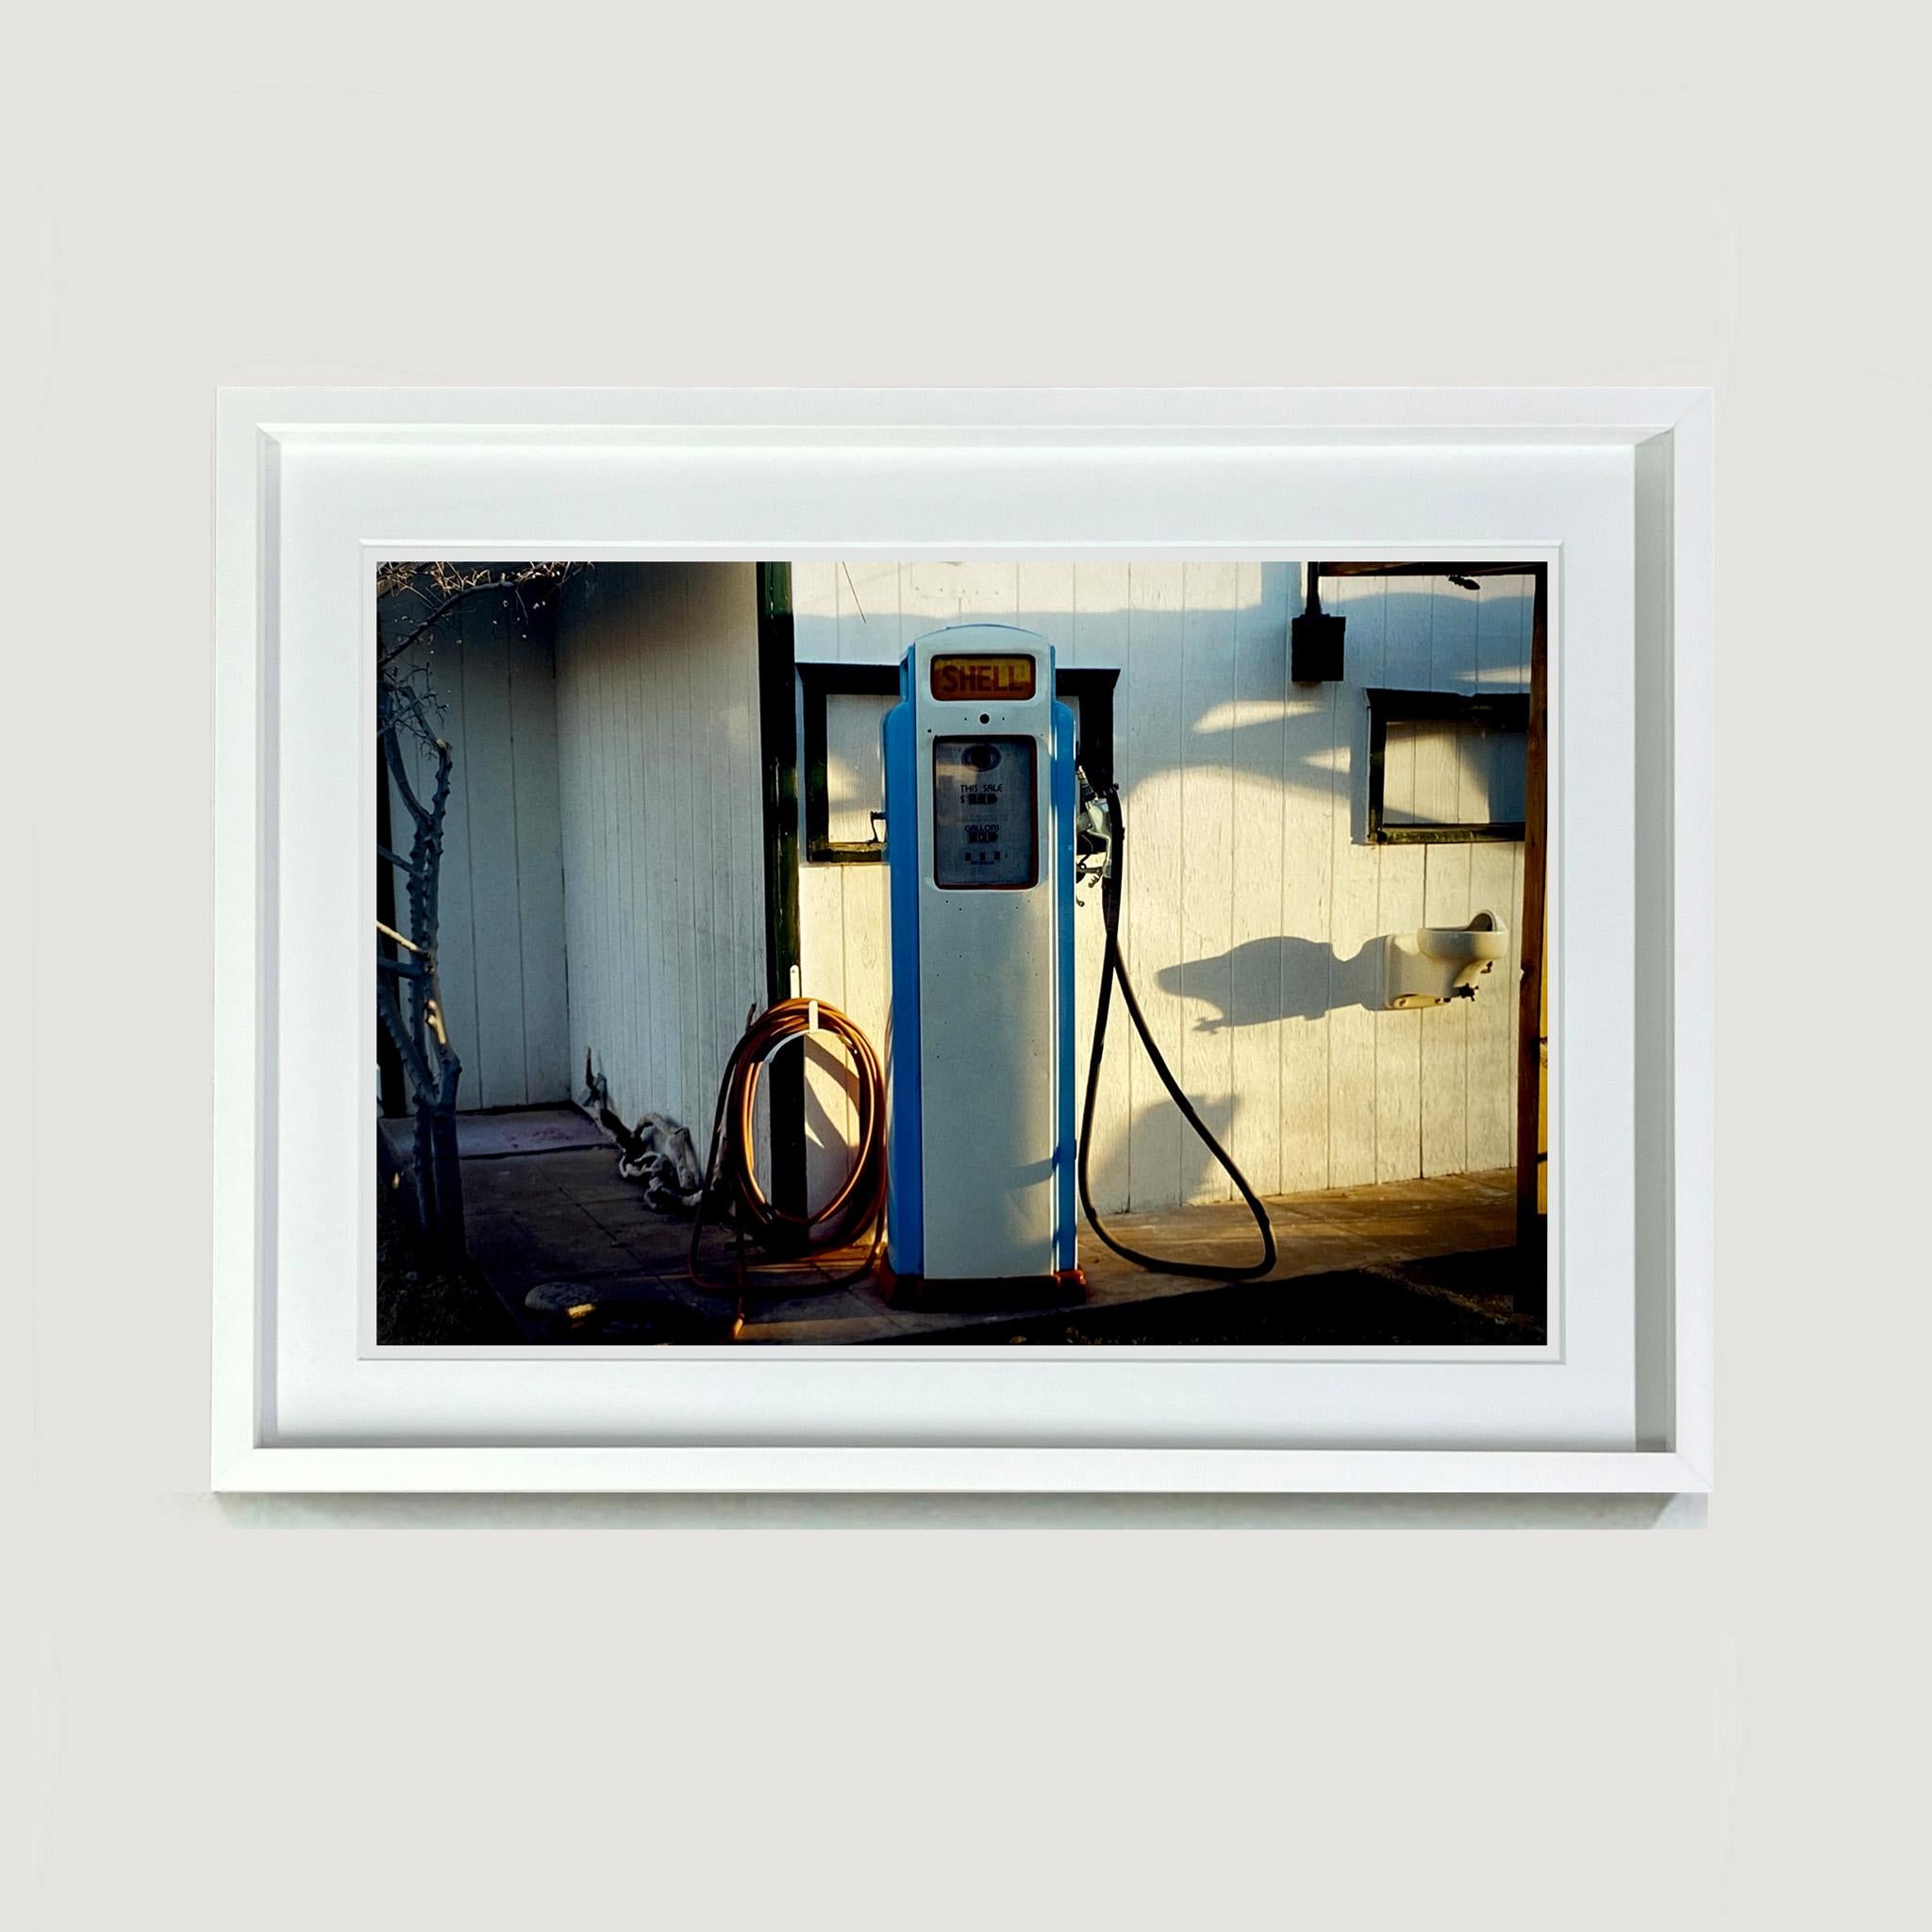 Gas Pump, Bisbee, Arizona - American Color Photograph - Contemporary Print by Richard Heeps